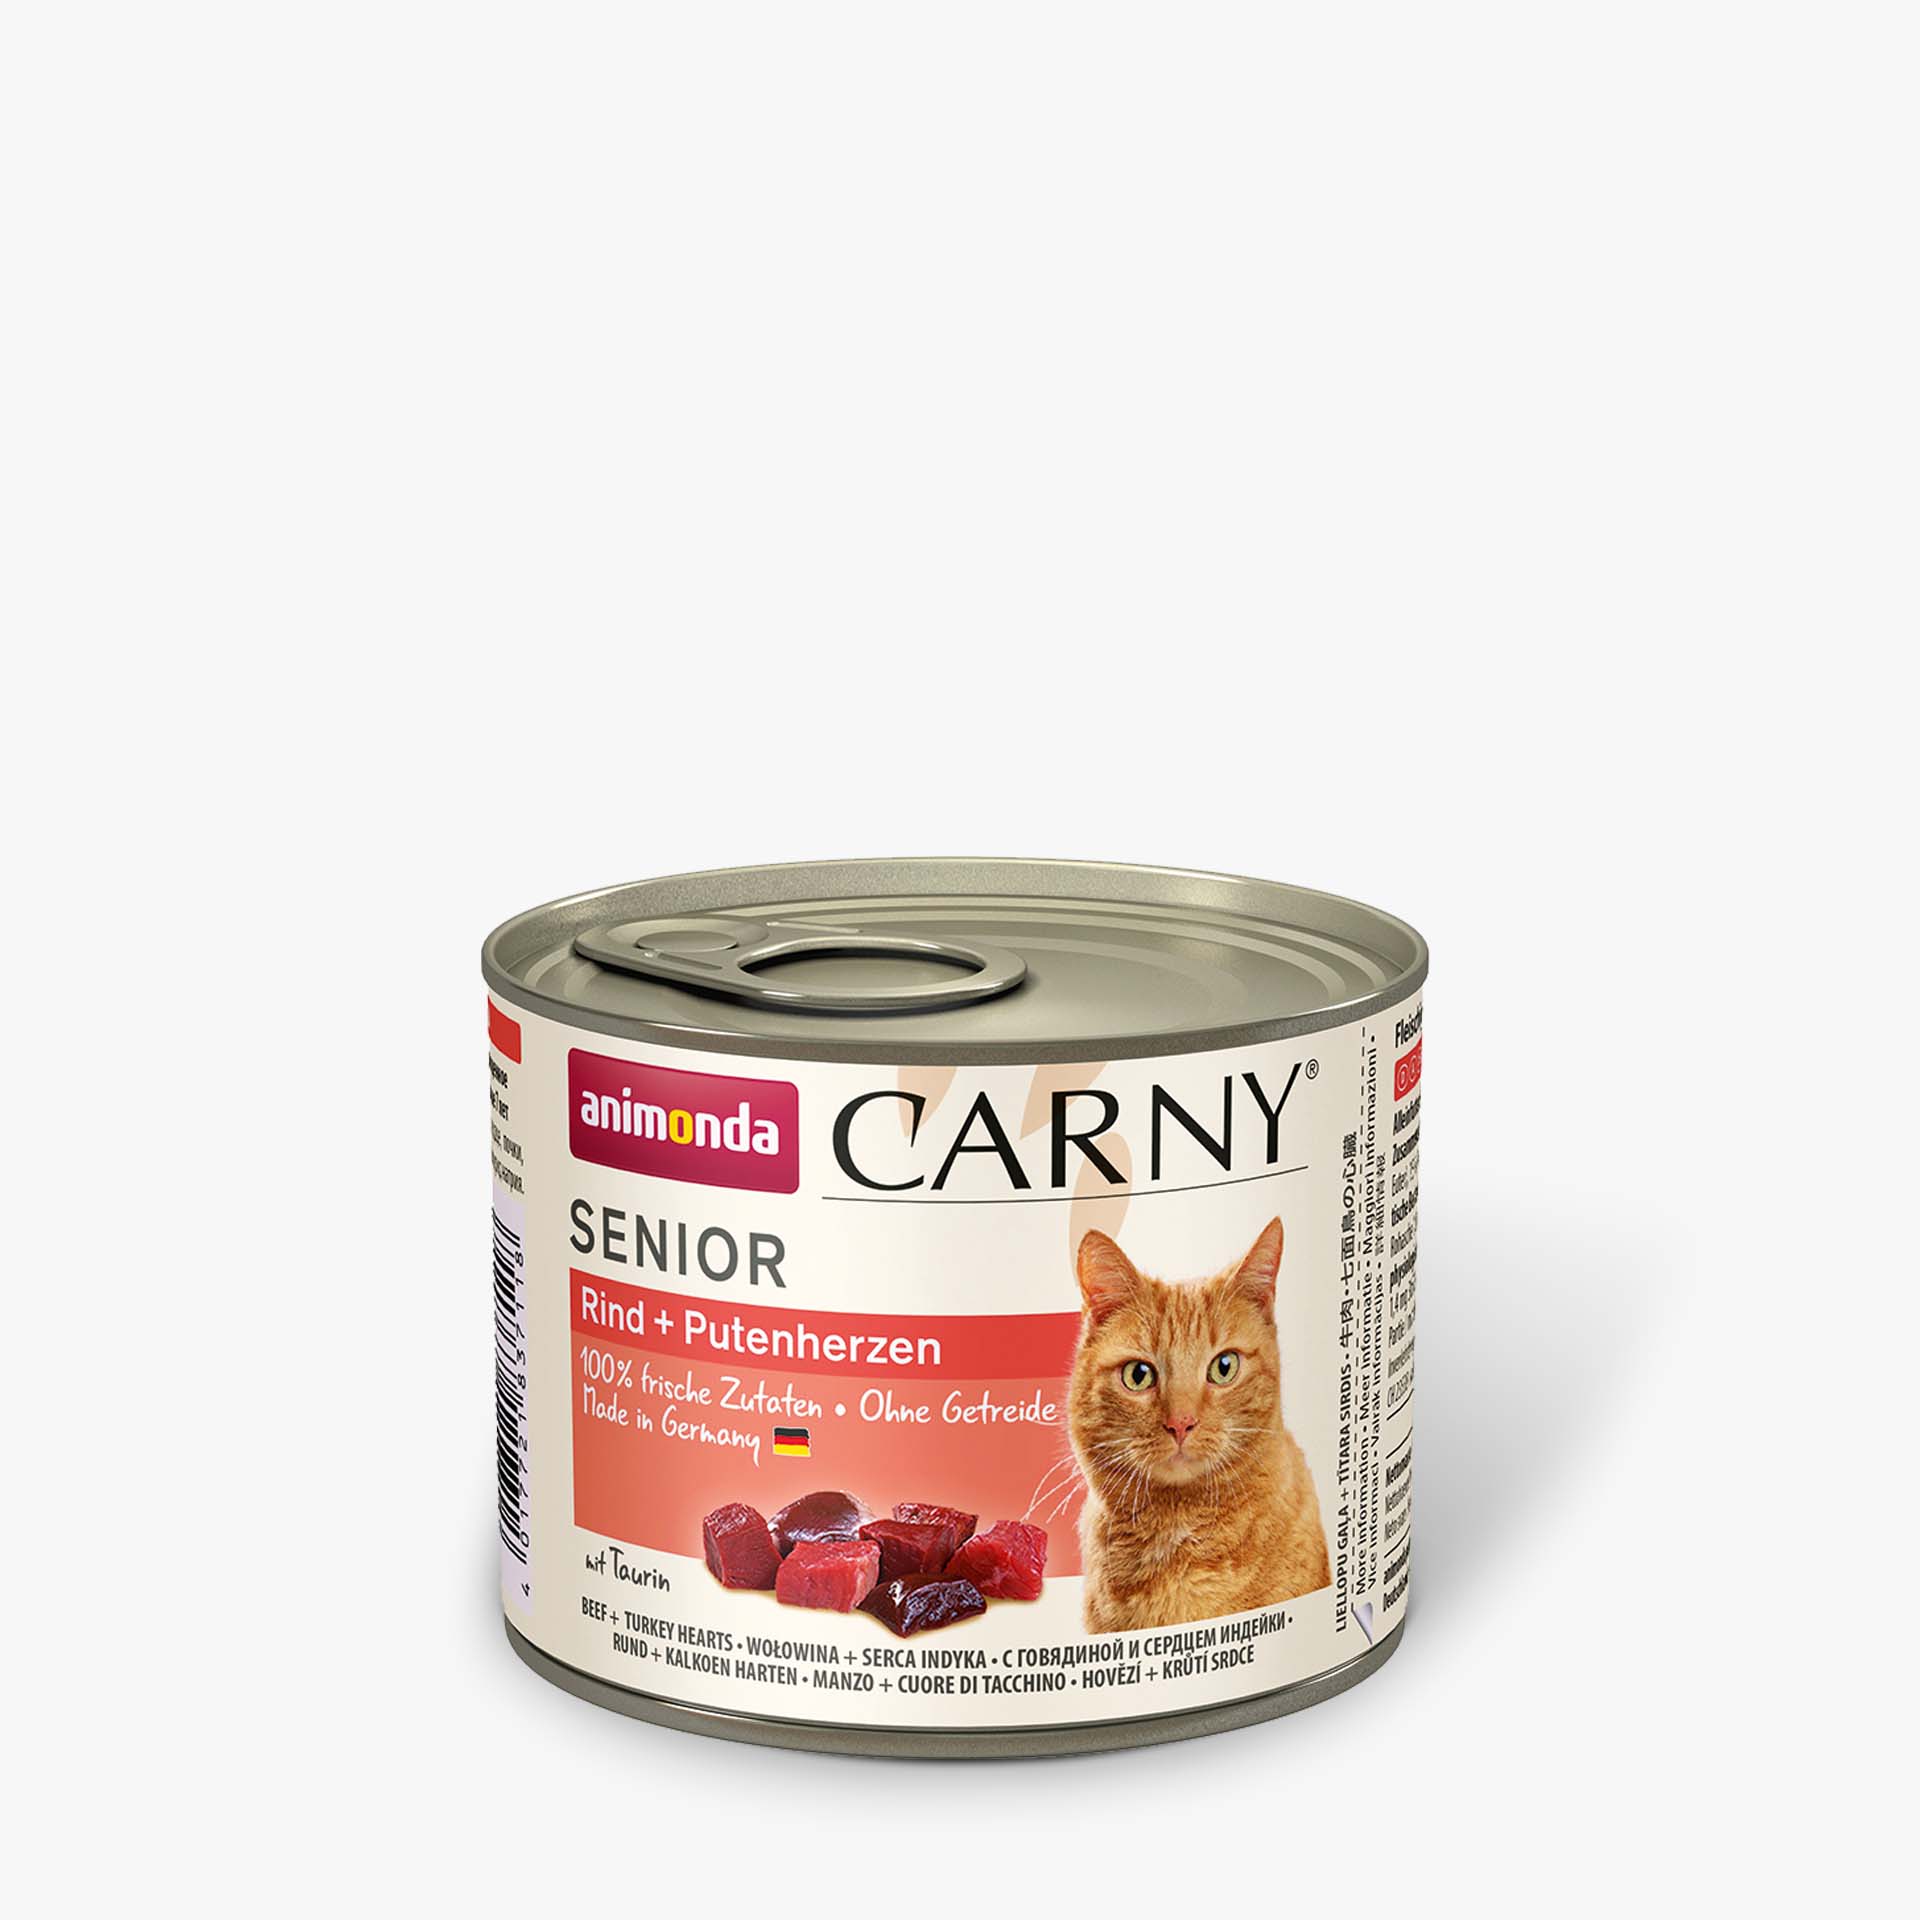 Carny Senior Rind + Putenherzen